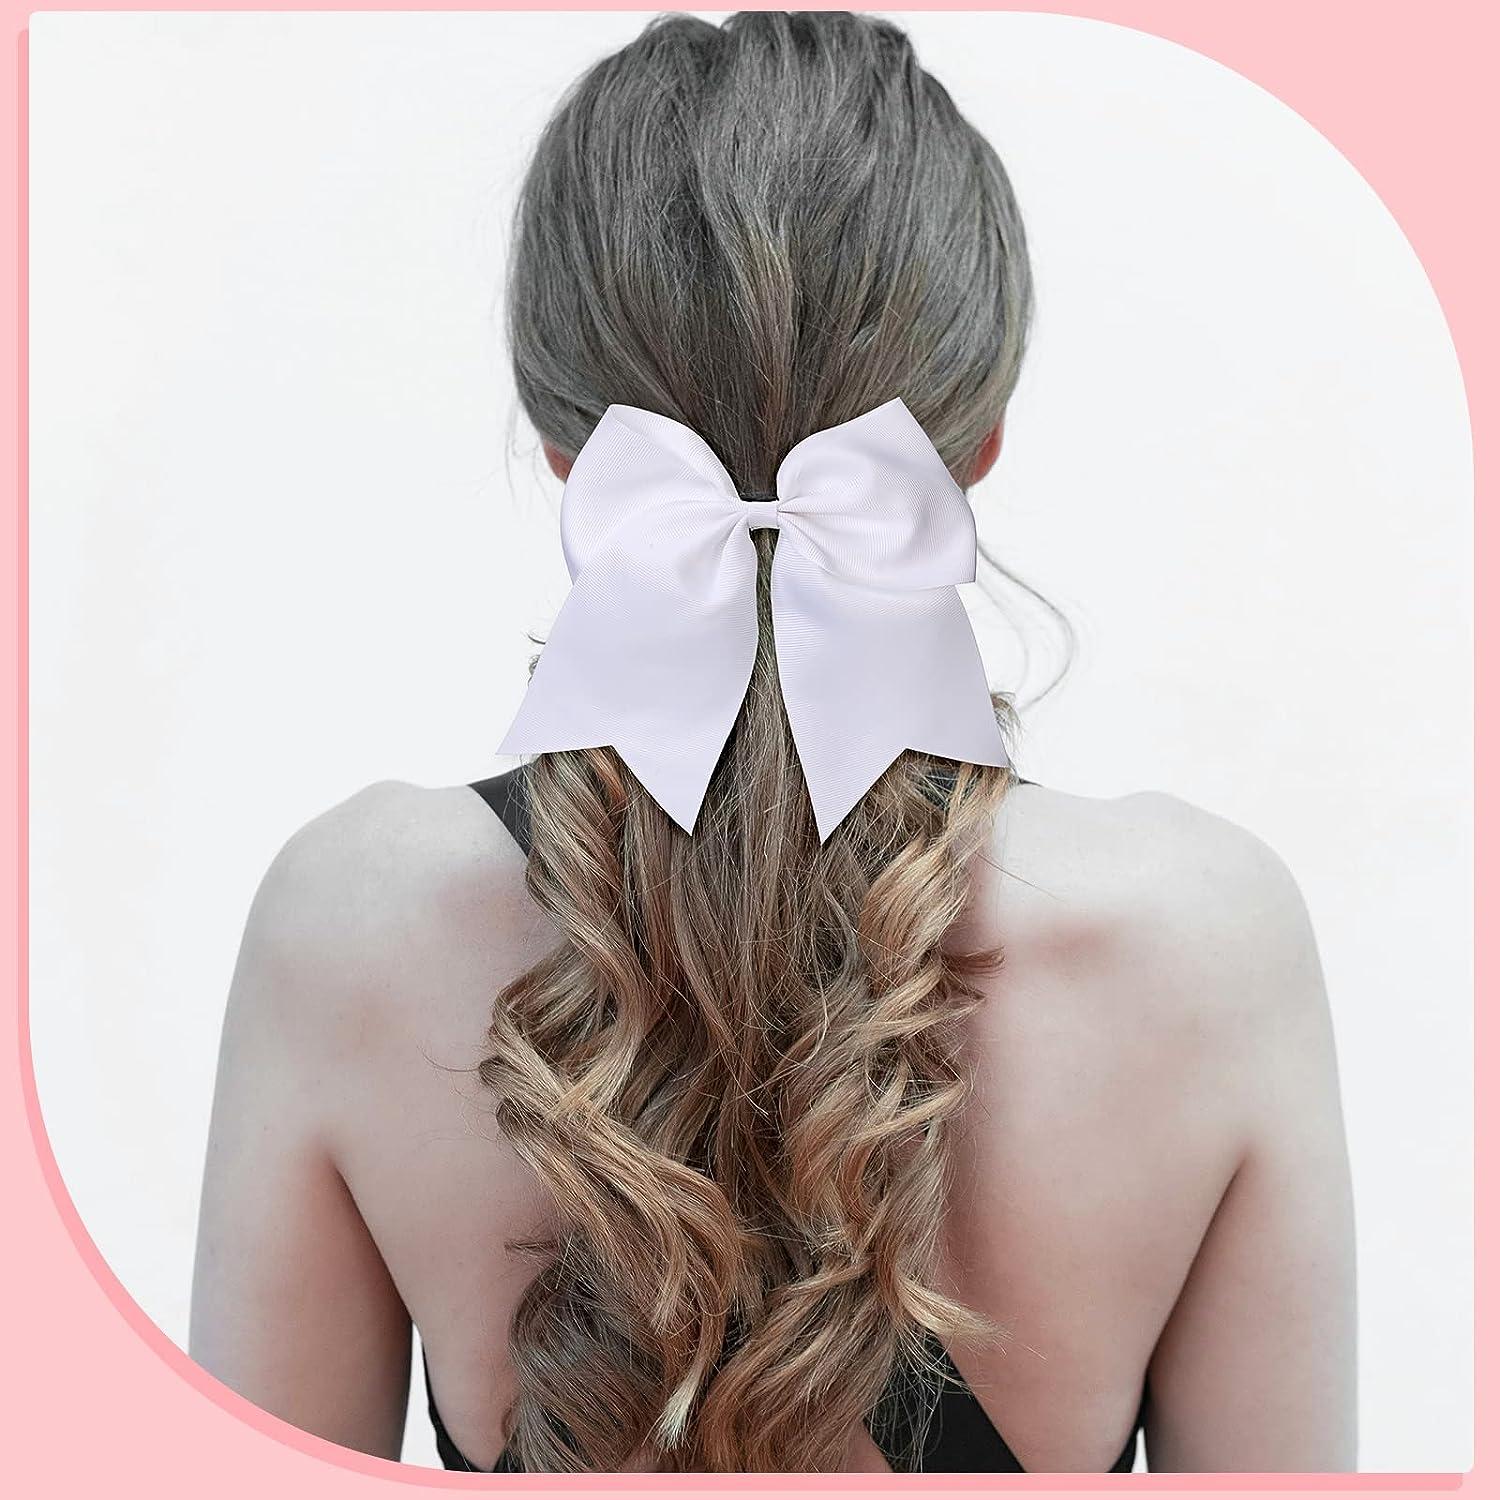  XL Bow Organizer for Girls Hair Bows - Holds All Hair